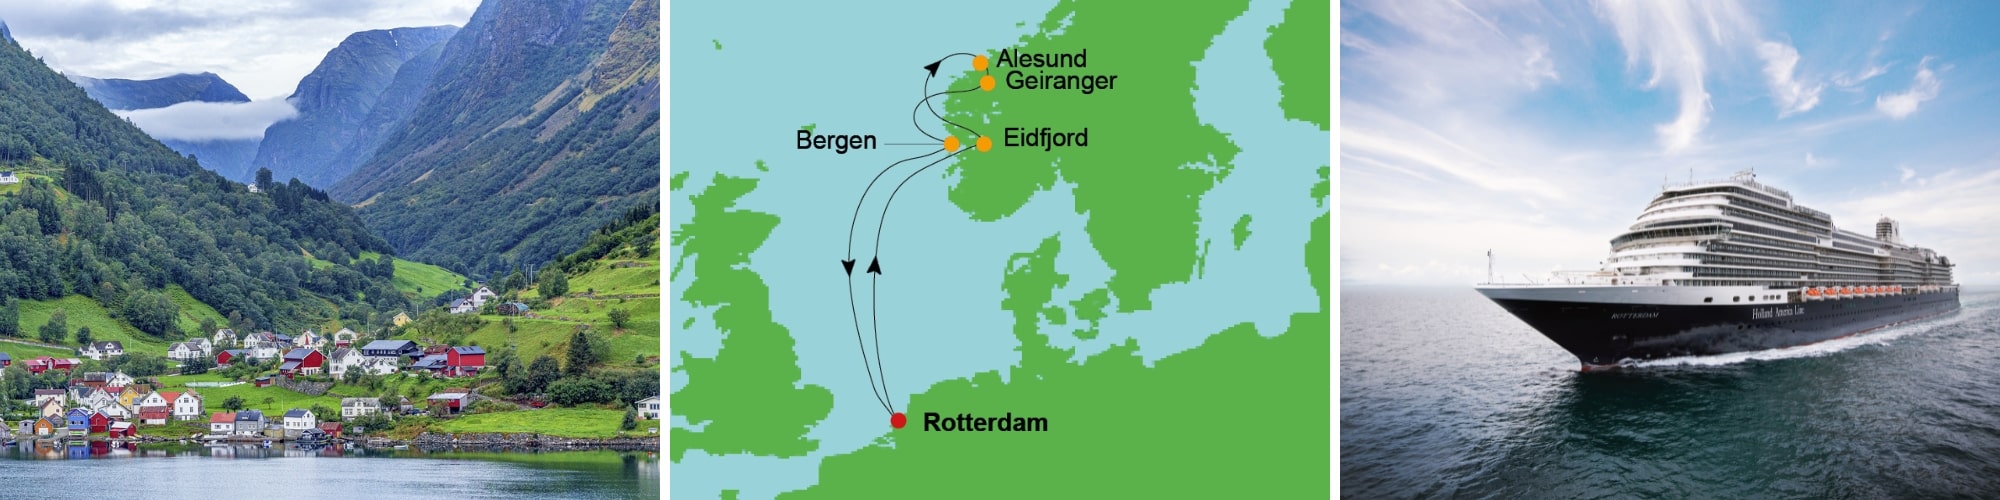 Noorse Fjorden Cruise - Noorwegen - Holland America Line - Rotterdam